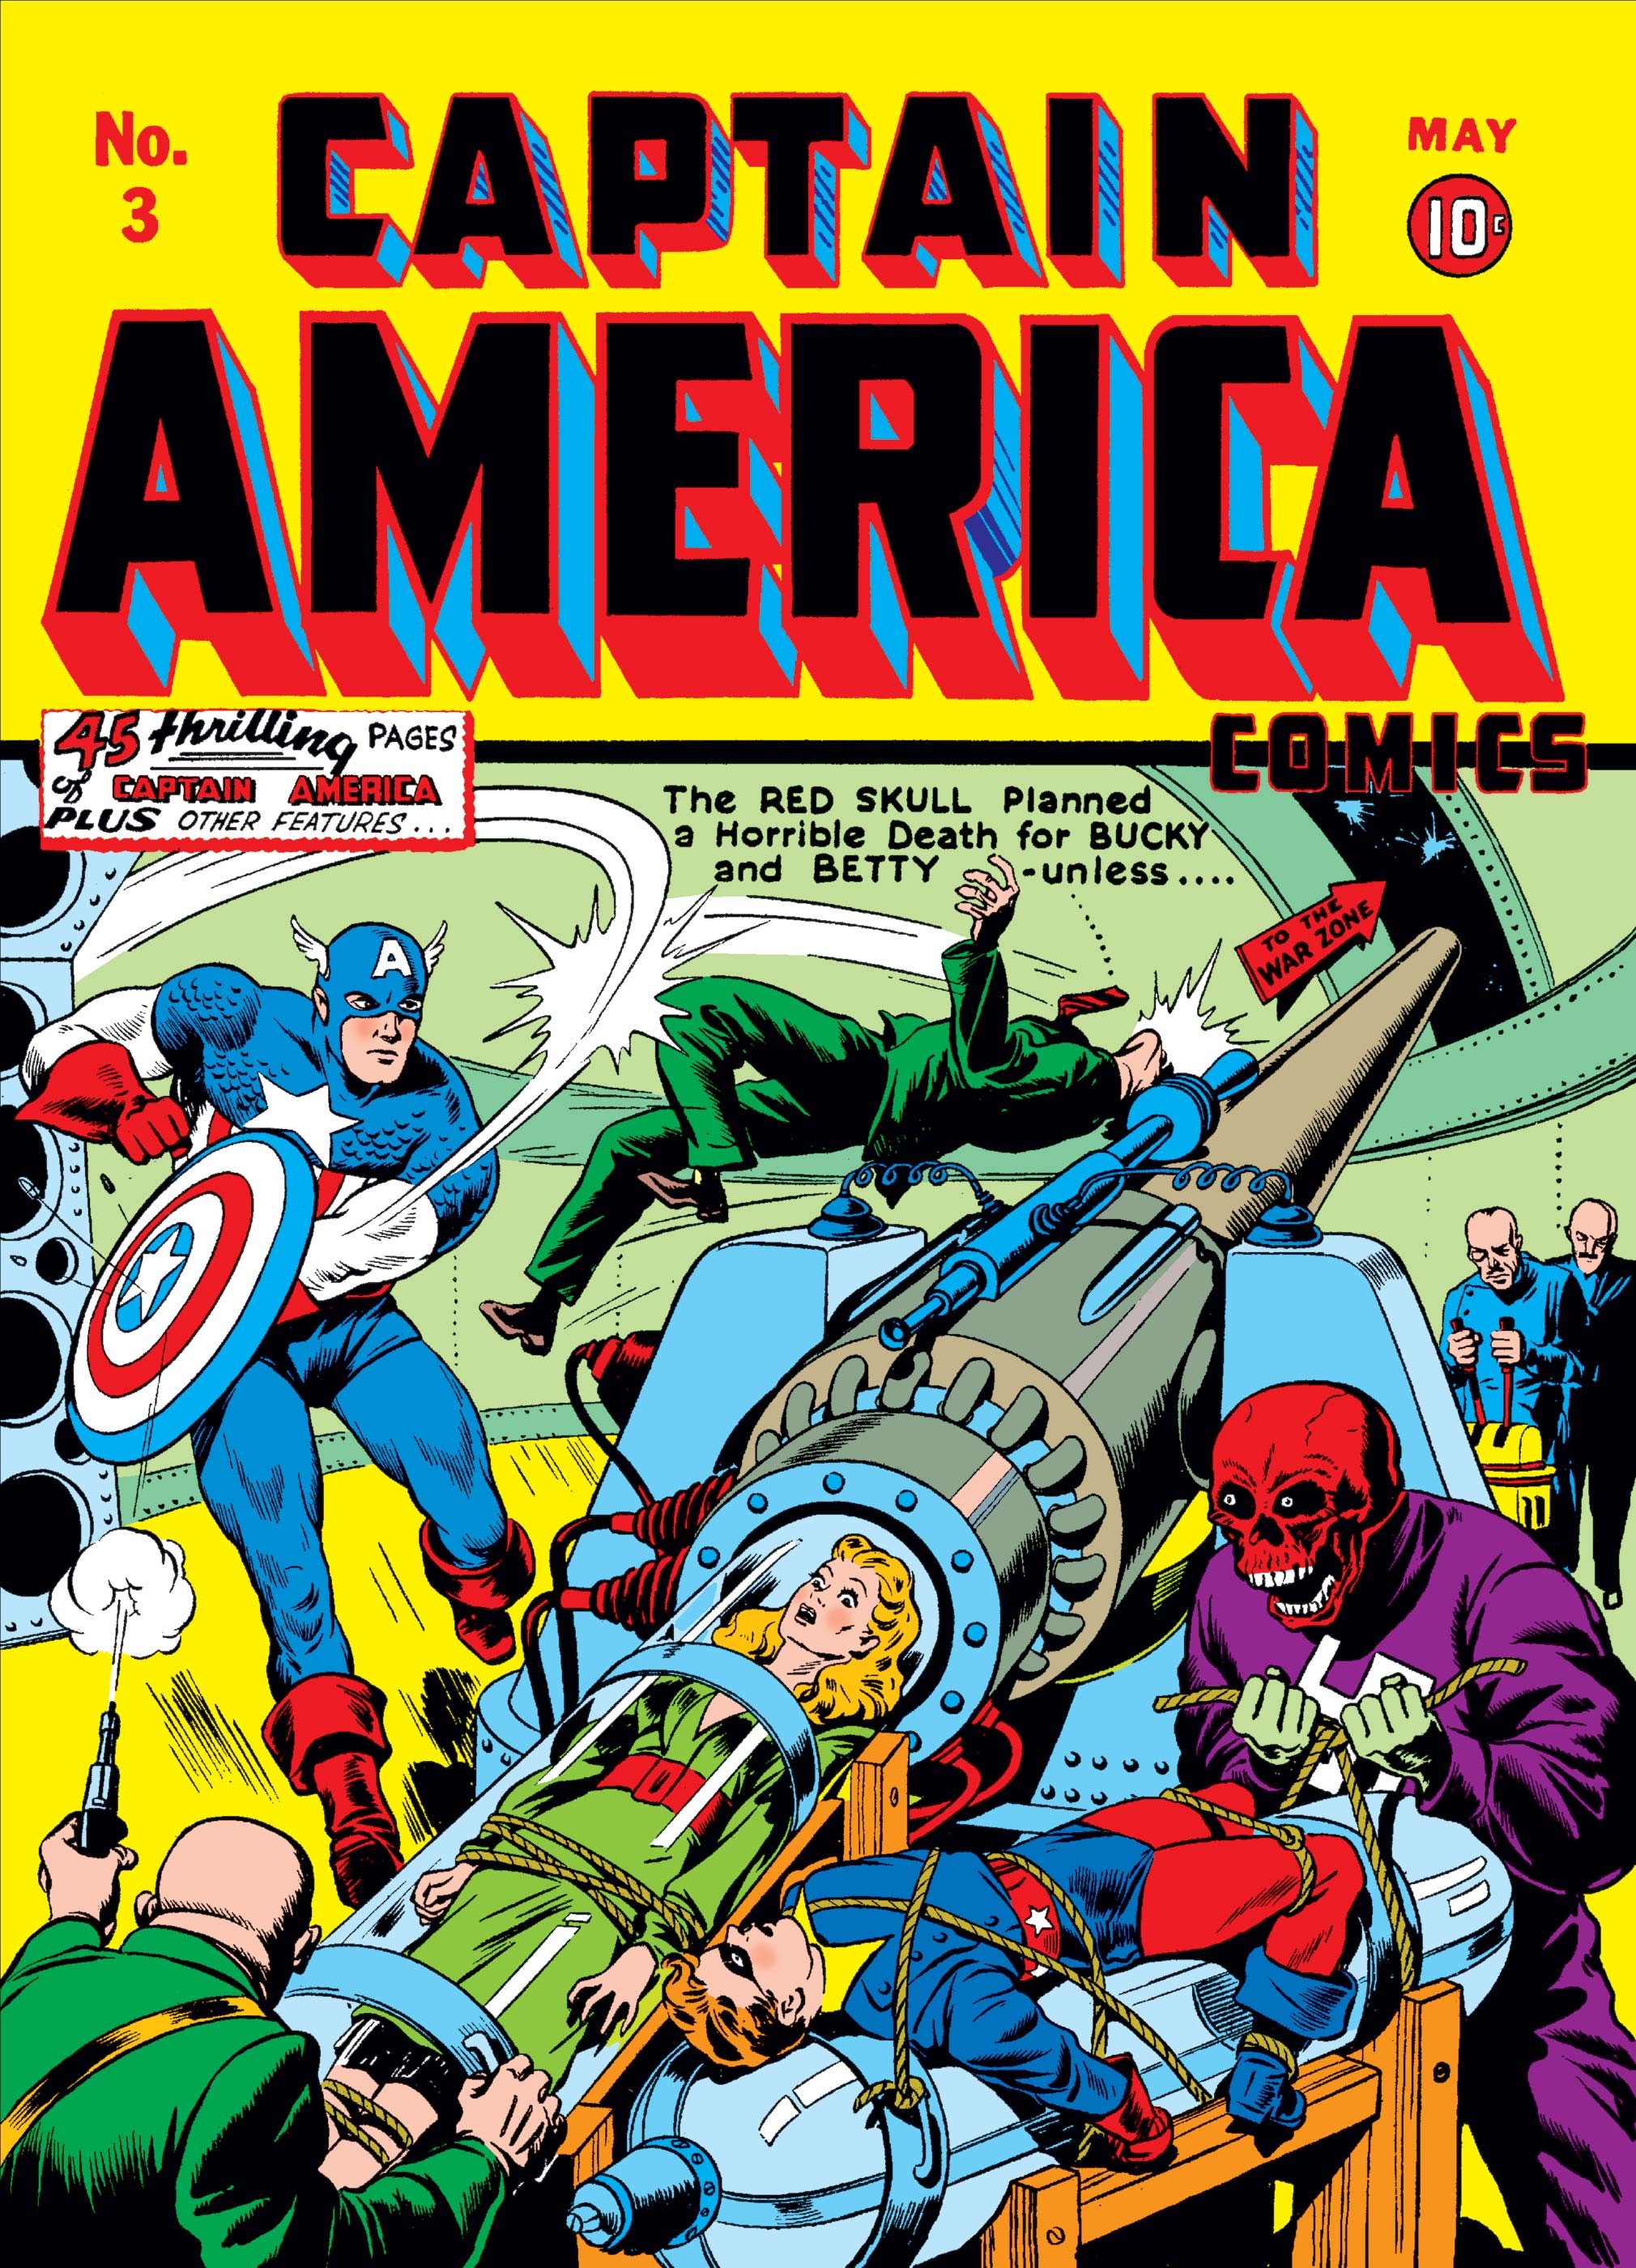 Captain America Comics (1941) #3